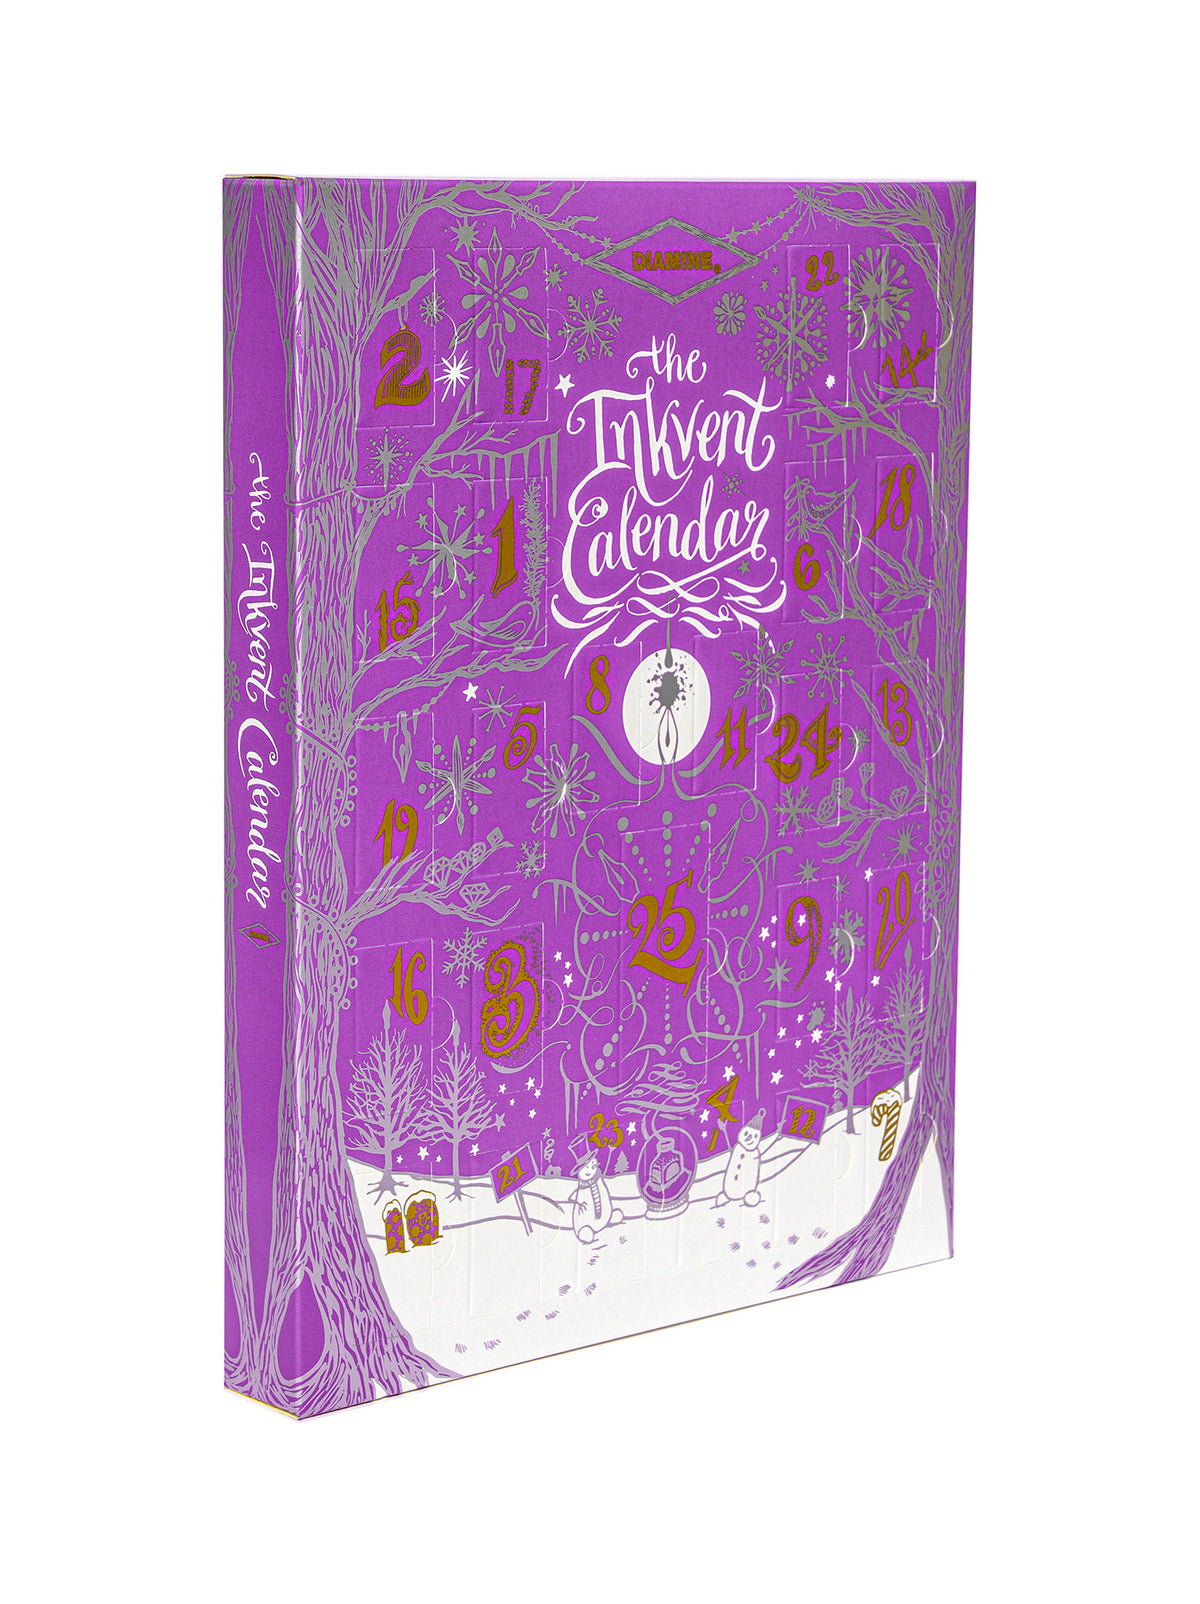 Diamine Inkvent Calendar Purple Edition